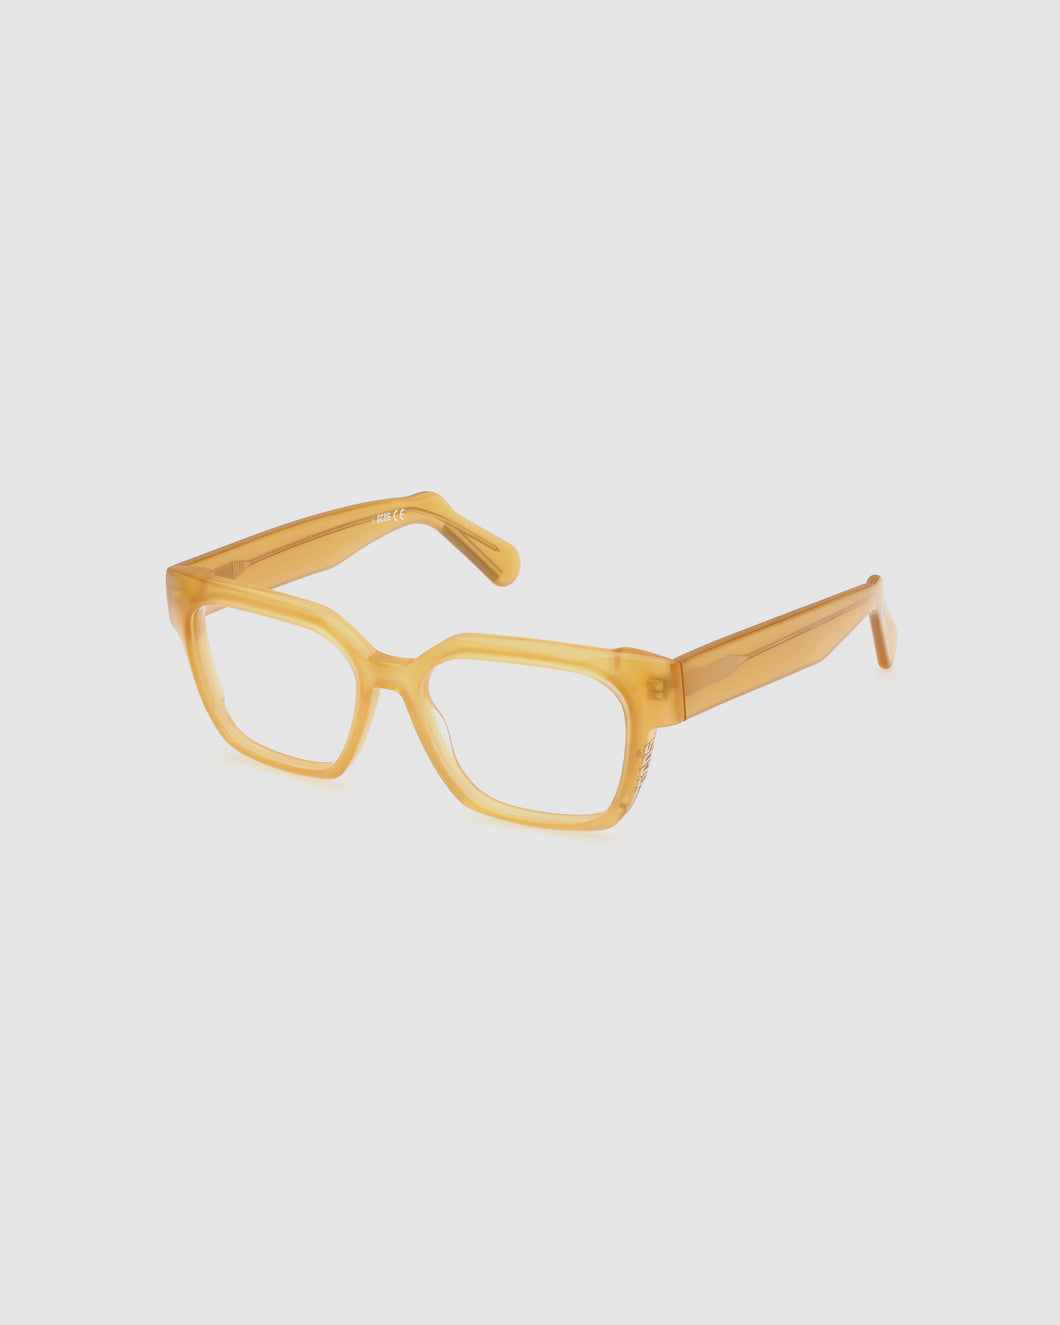 GD5013 Squared eyeglasses : Unisex Sunglasses Yellow  | GCDS